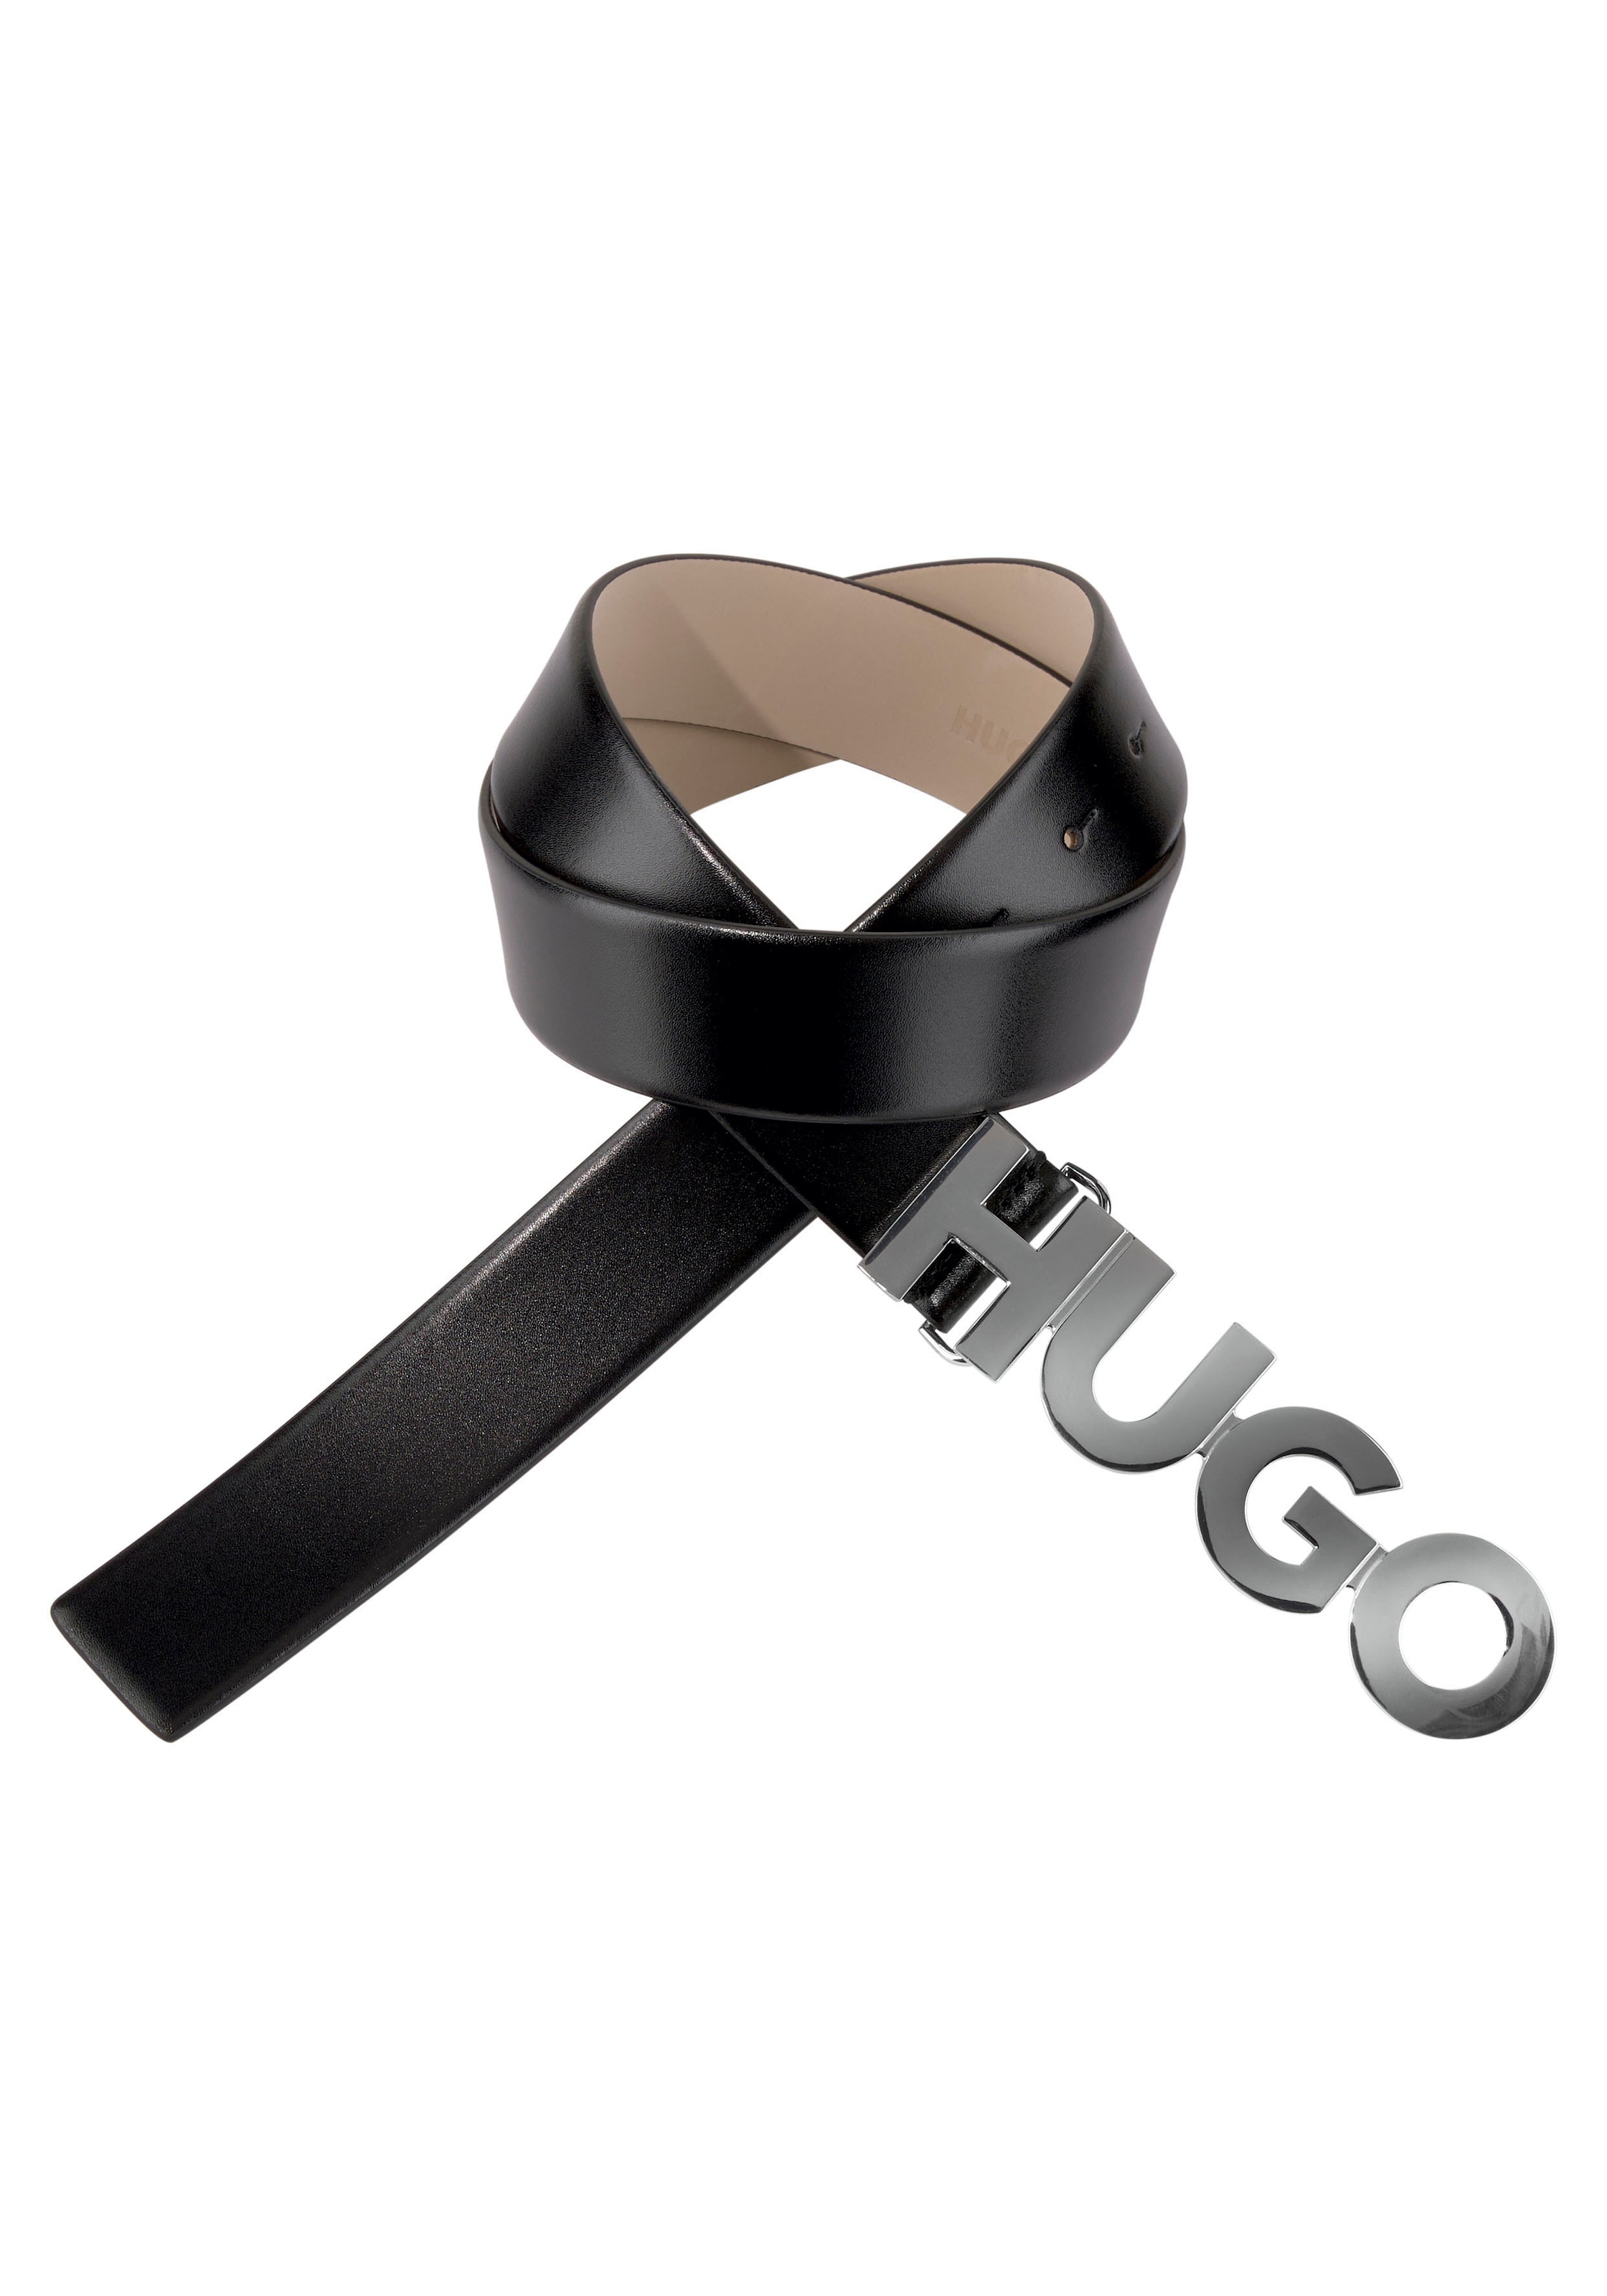 HUGO Ledergürtel, mit Logo-Schliesse